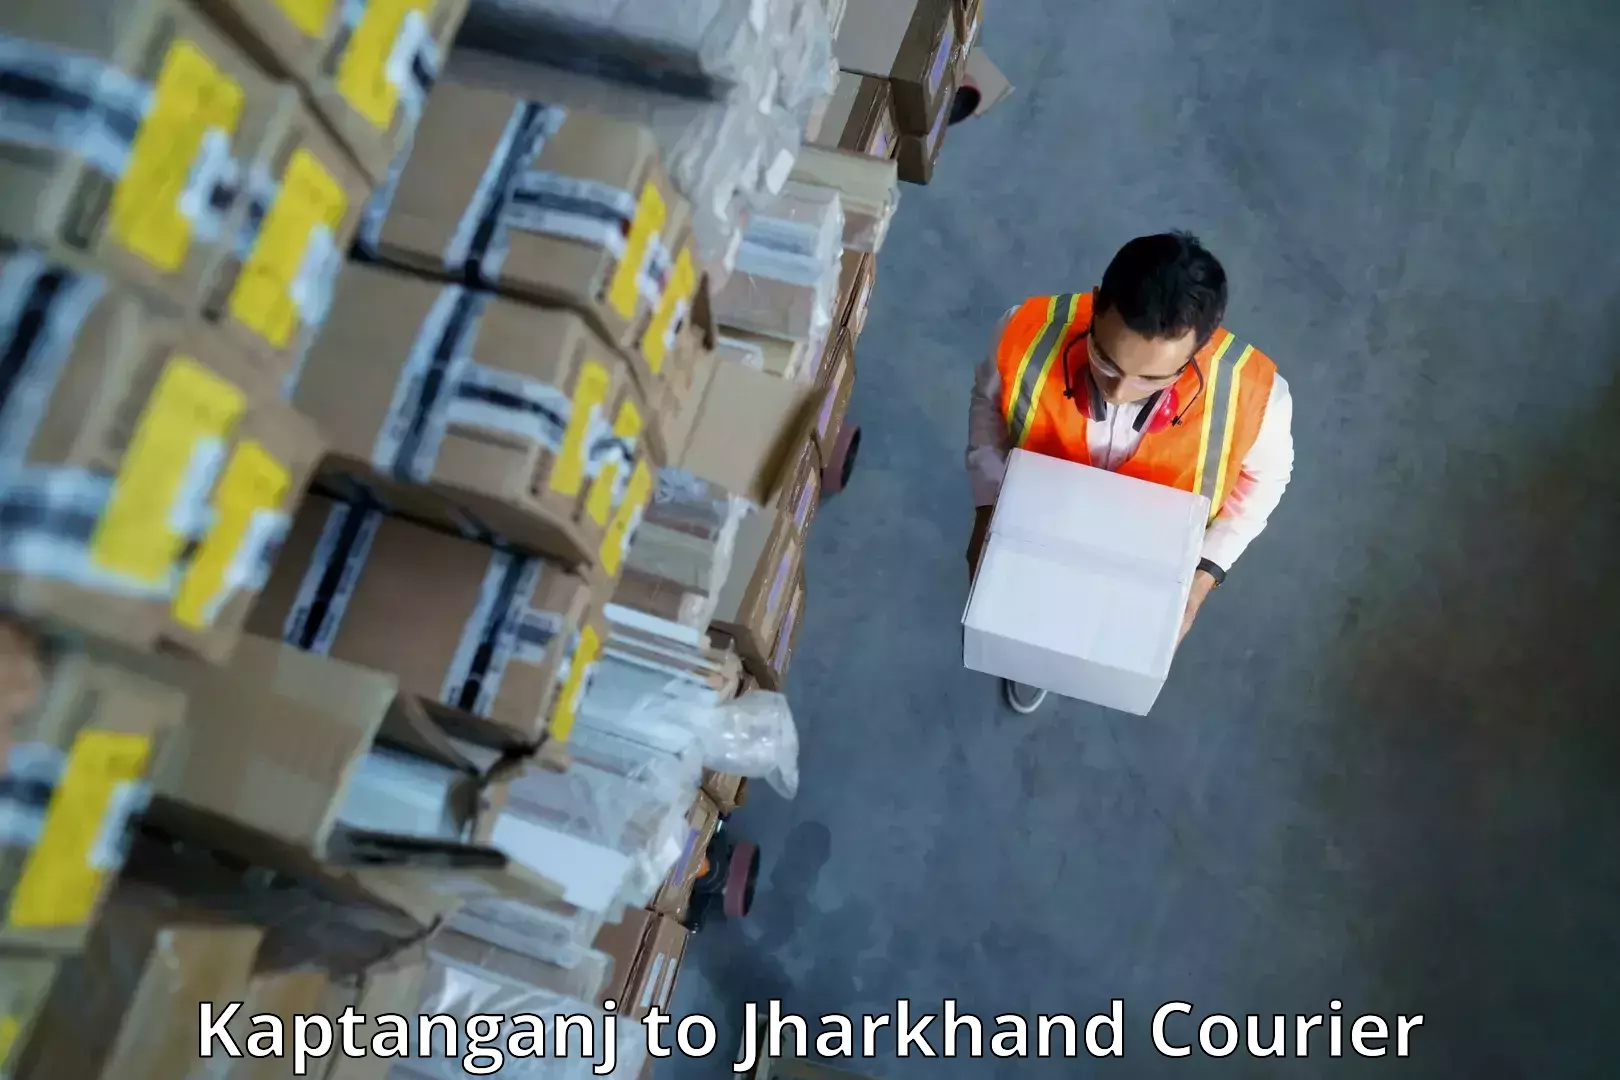 Courier service comparison Kaptanganj to Shikaripara